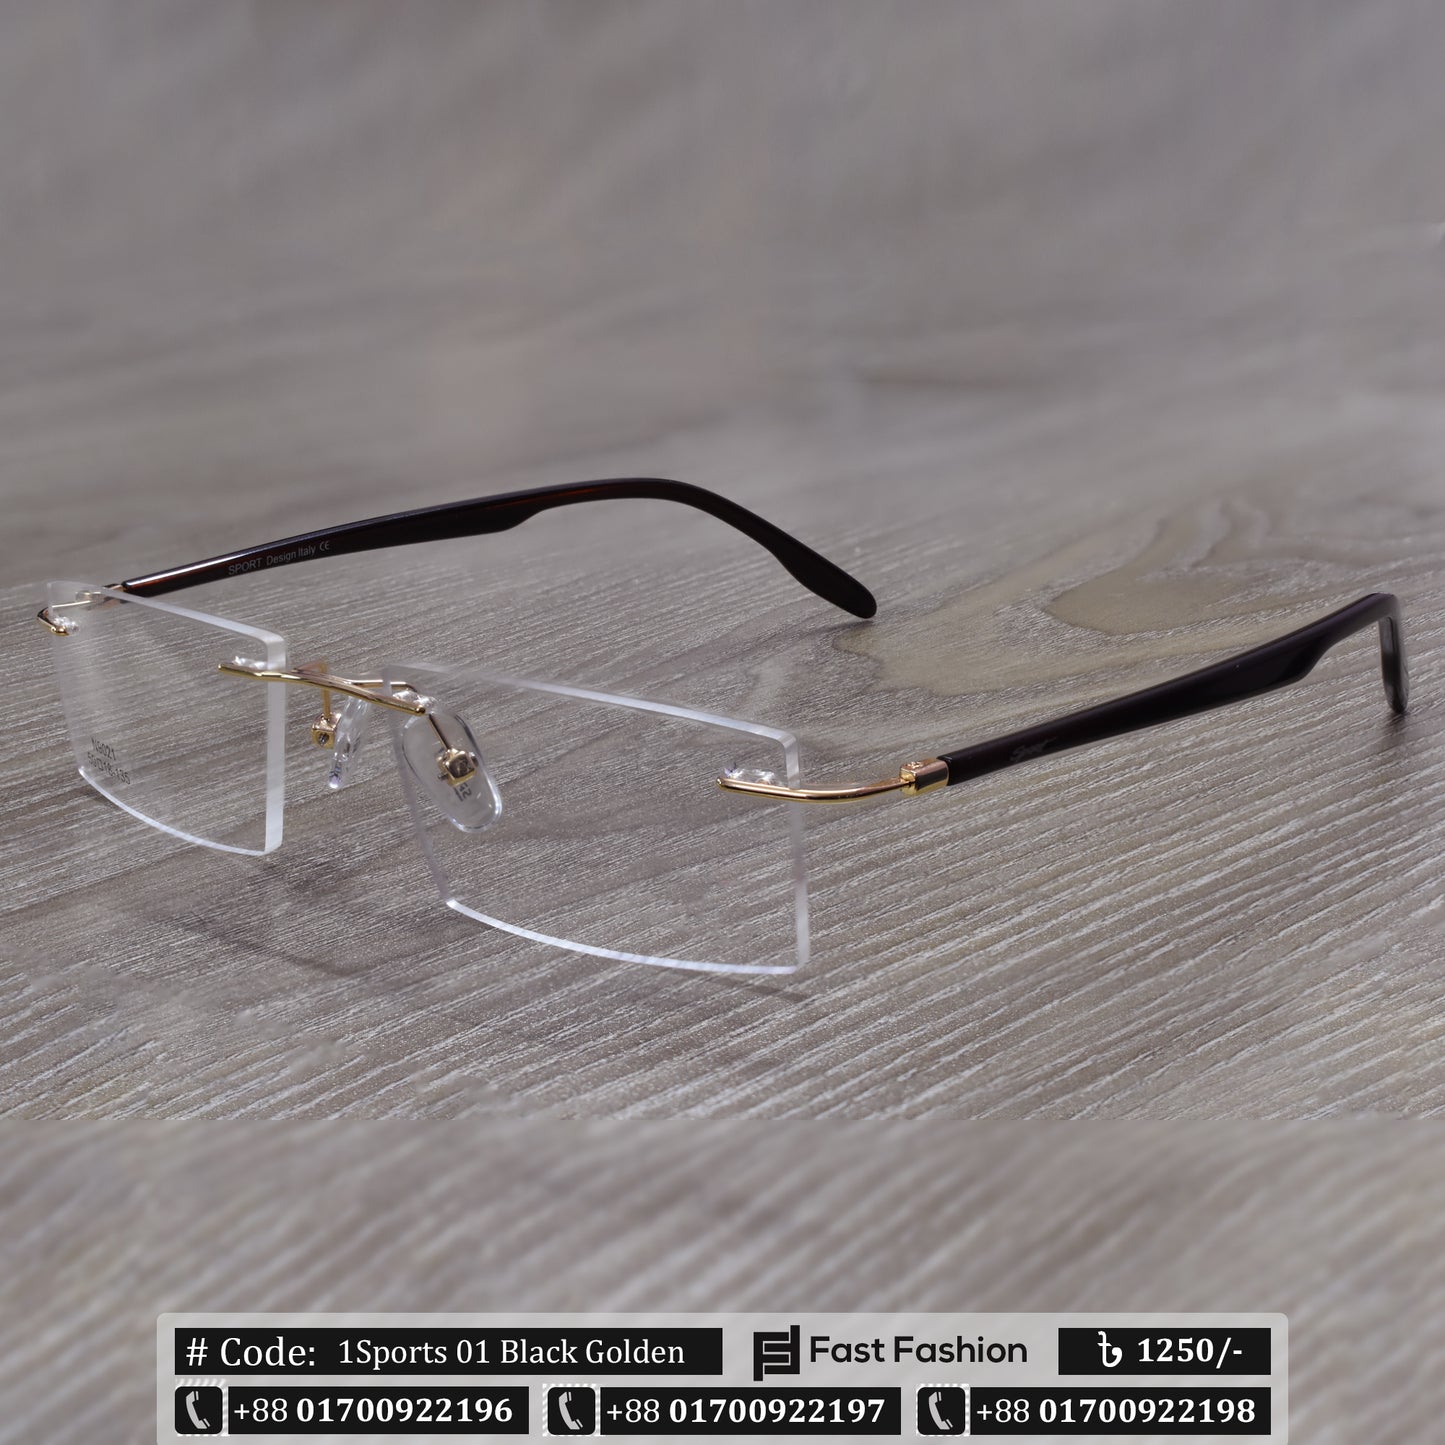 Trendy Modern Stylish New 1Sports Optic Frame | 1Sports Frame 01 | Premium Quality